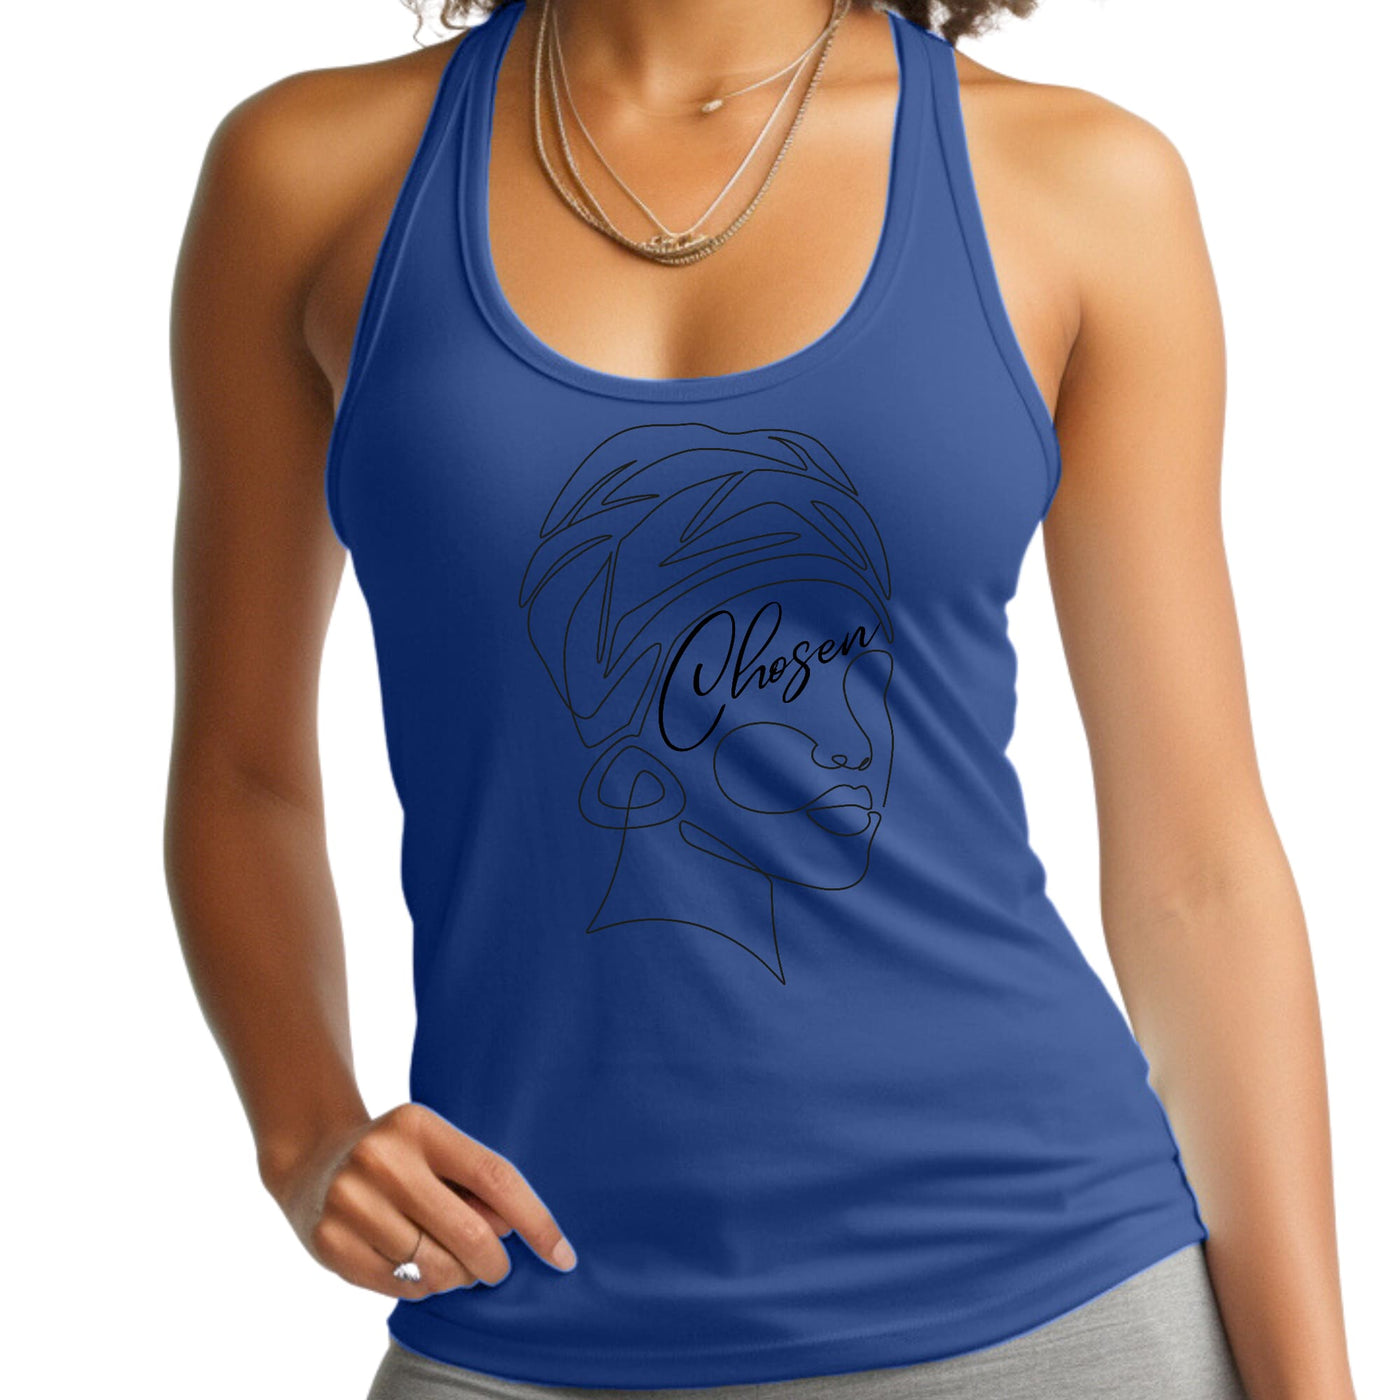 Womens Fitness Tank Top Graphic T-shirt Say It Soul ’chosen’ Black - Womens